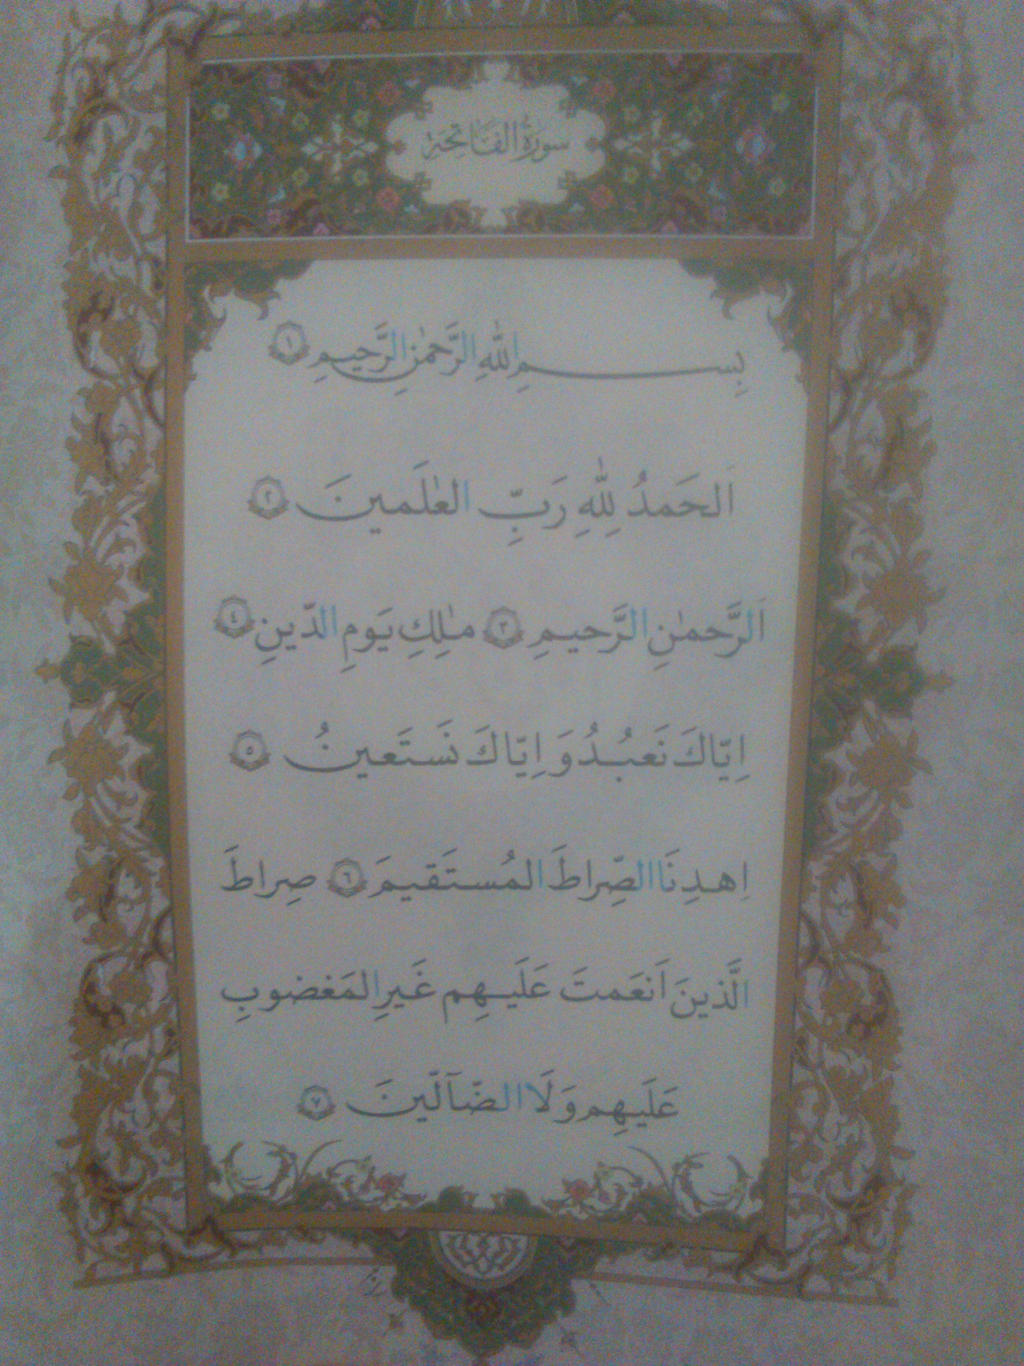 The Arabic text of Surah Al-Fatiha